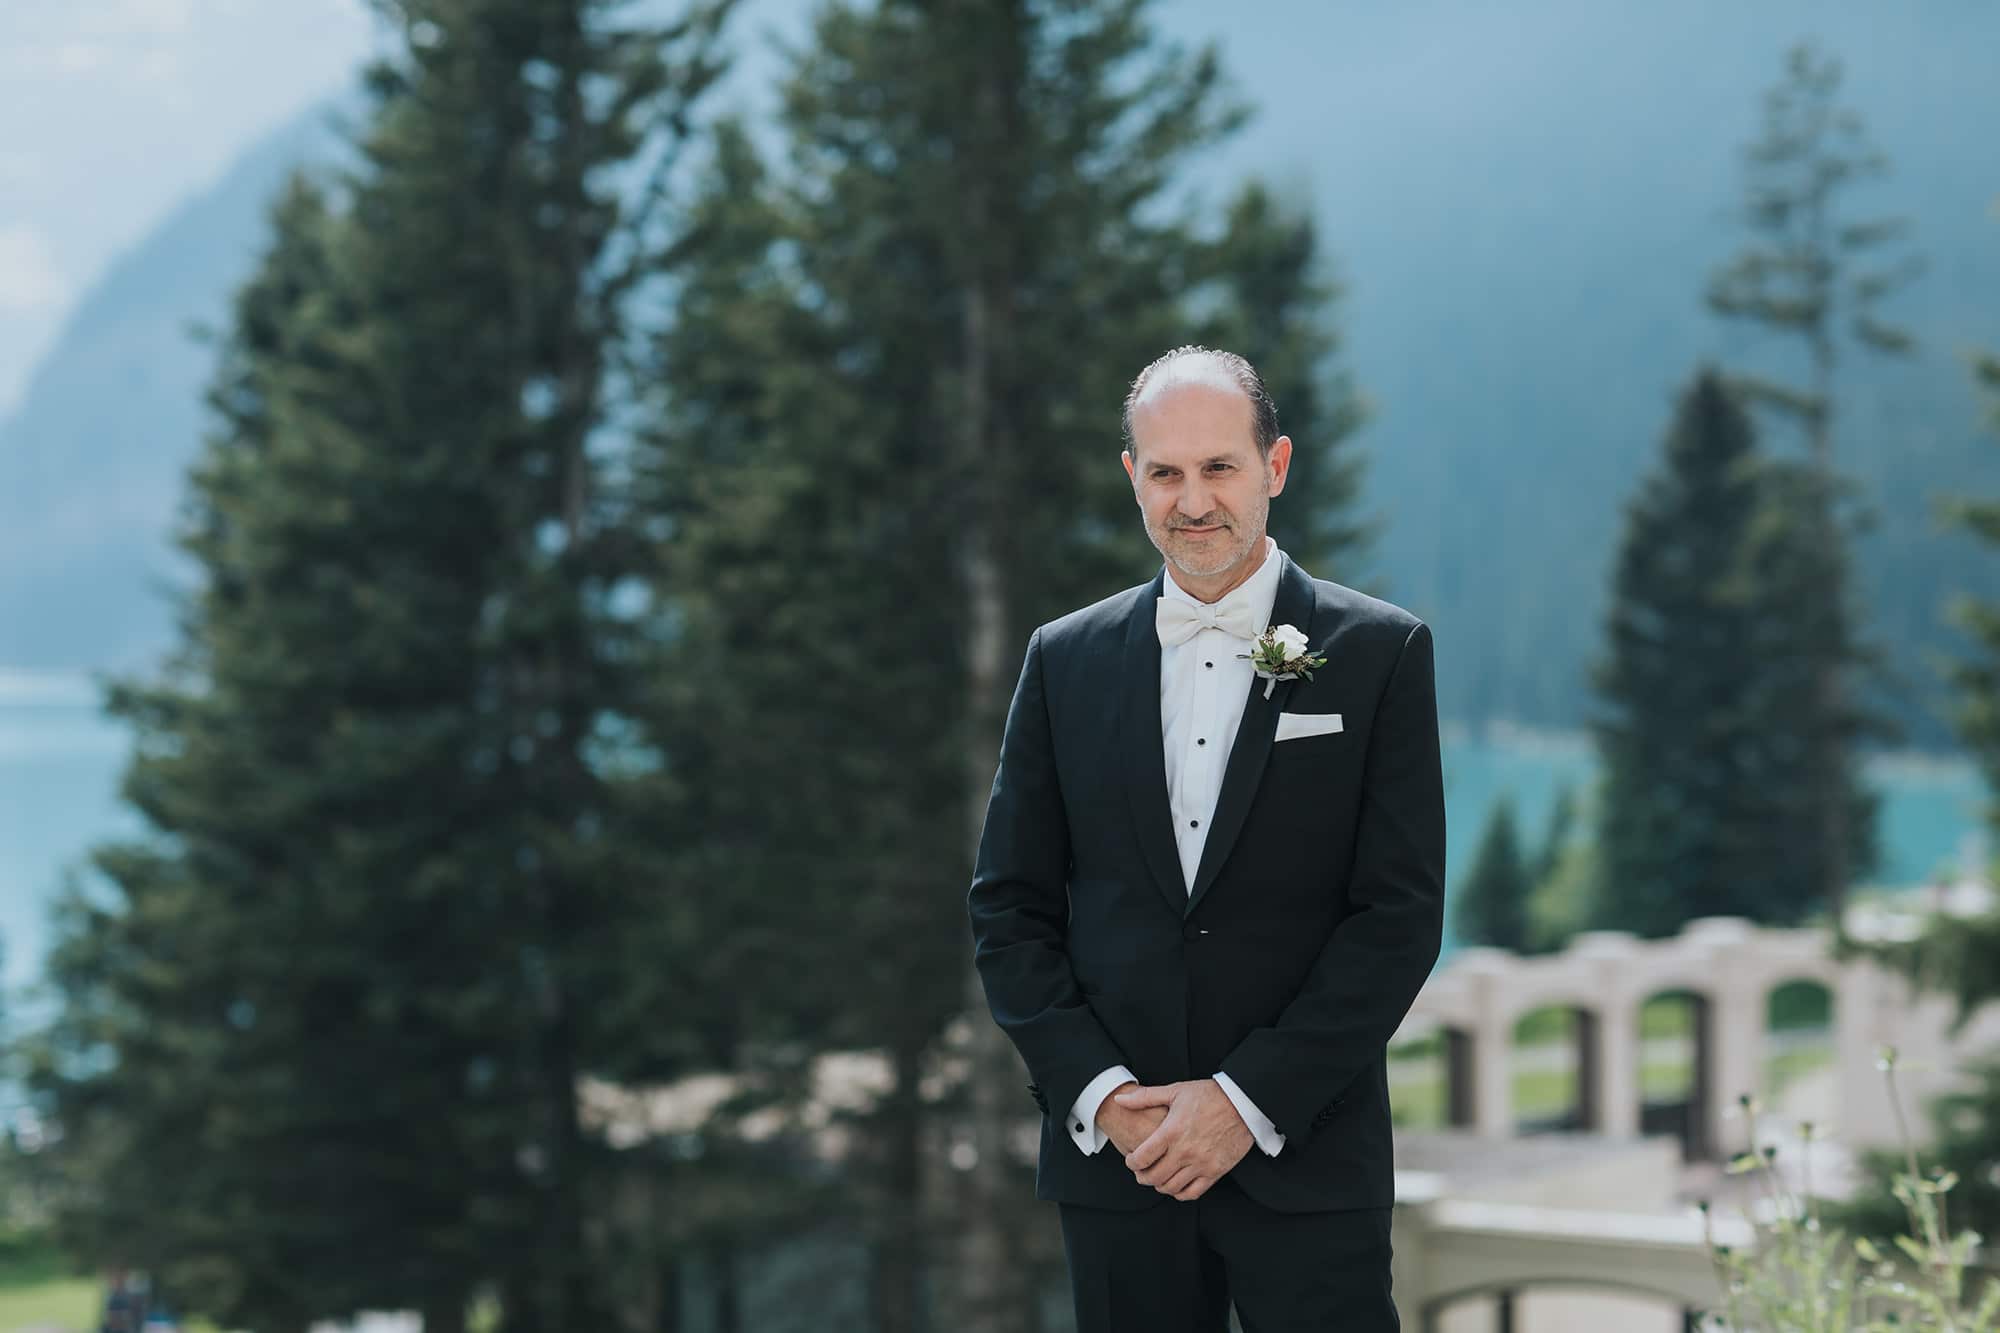 Elegant Fairmont Chateau Lake Louise wedding victoria terrace outdoor ceremony